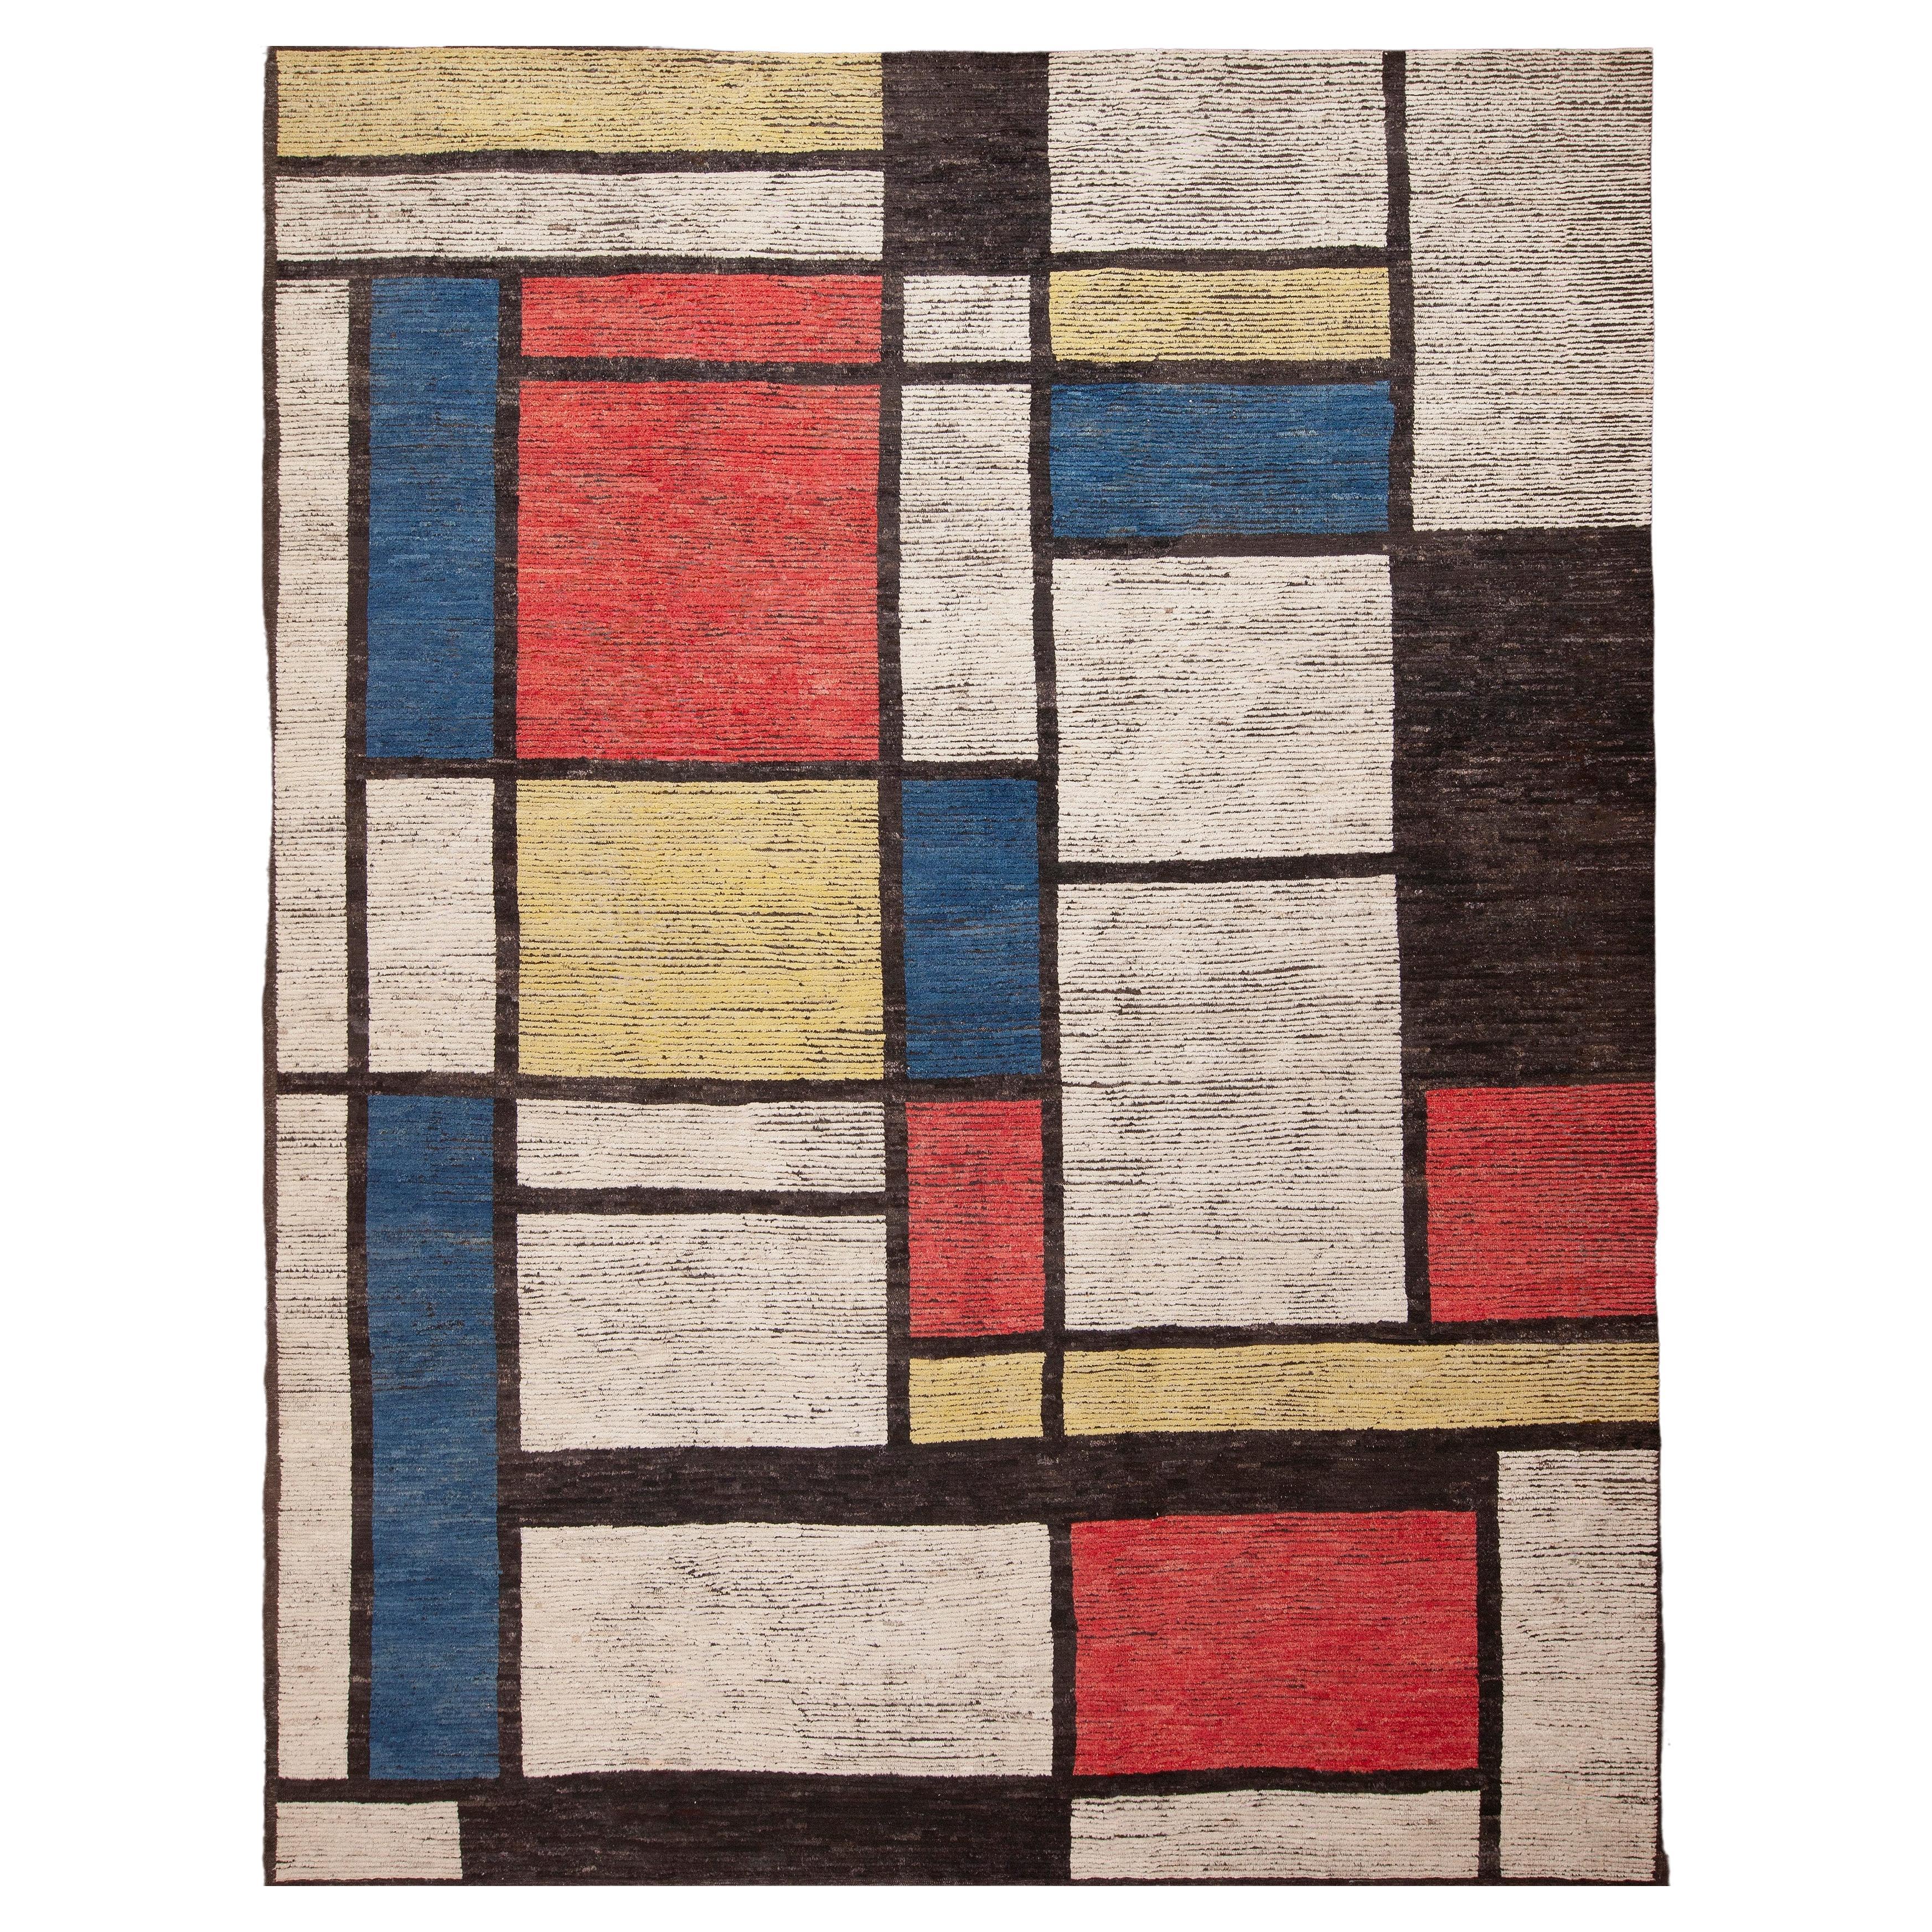 The Moderns Collective Tapis contemporain Artistics Piet Mondrian Modern 10'8" x 14'.